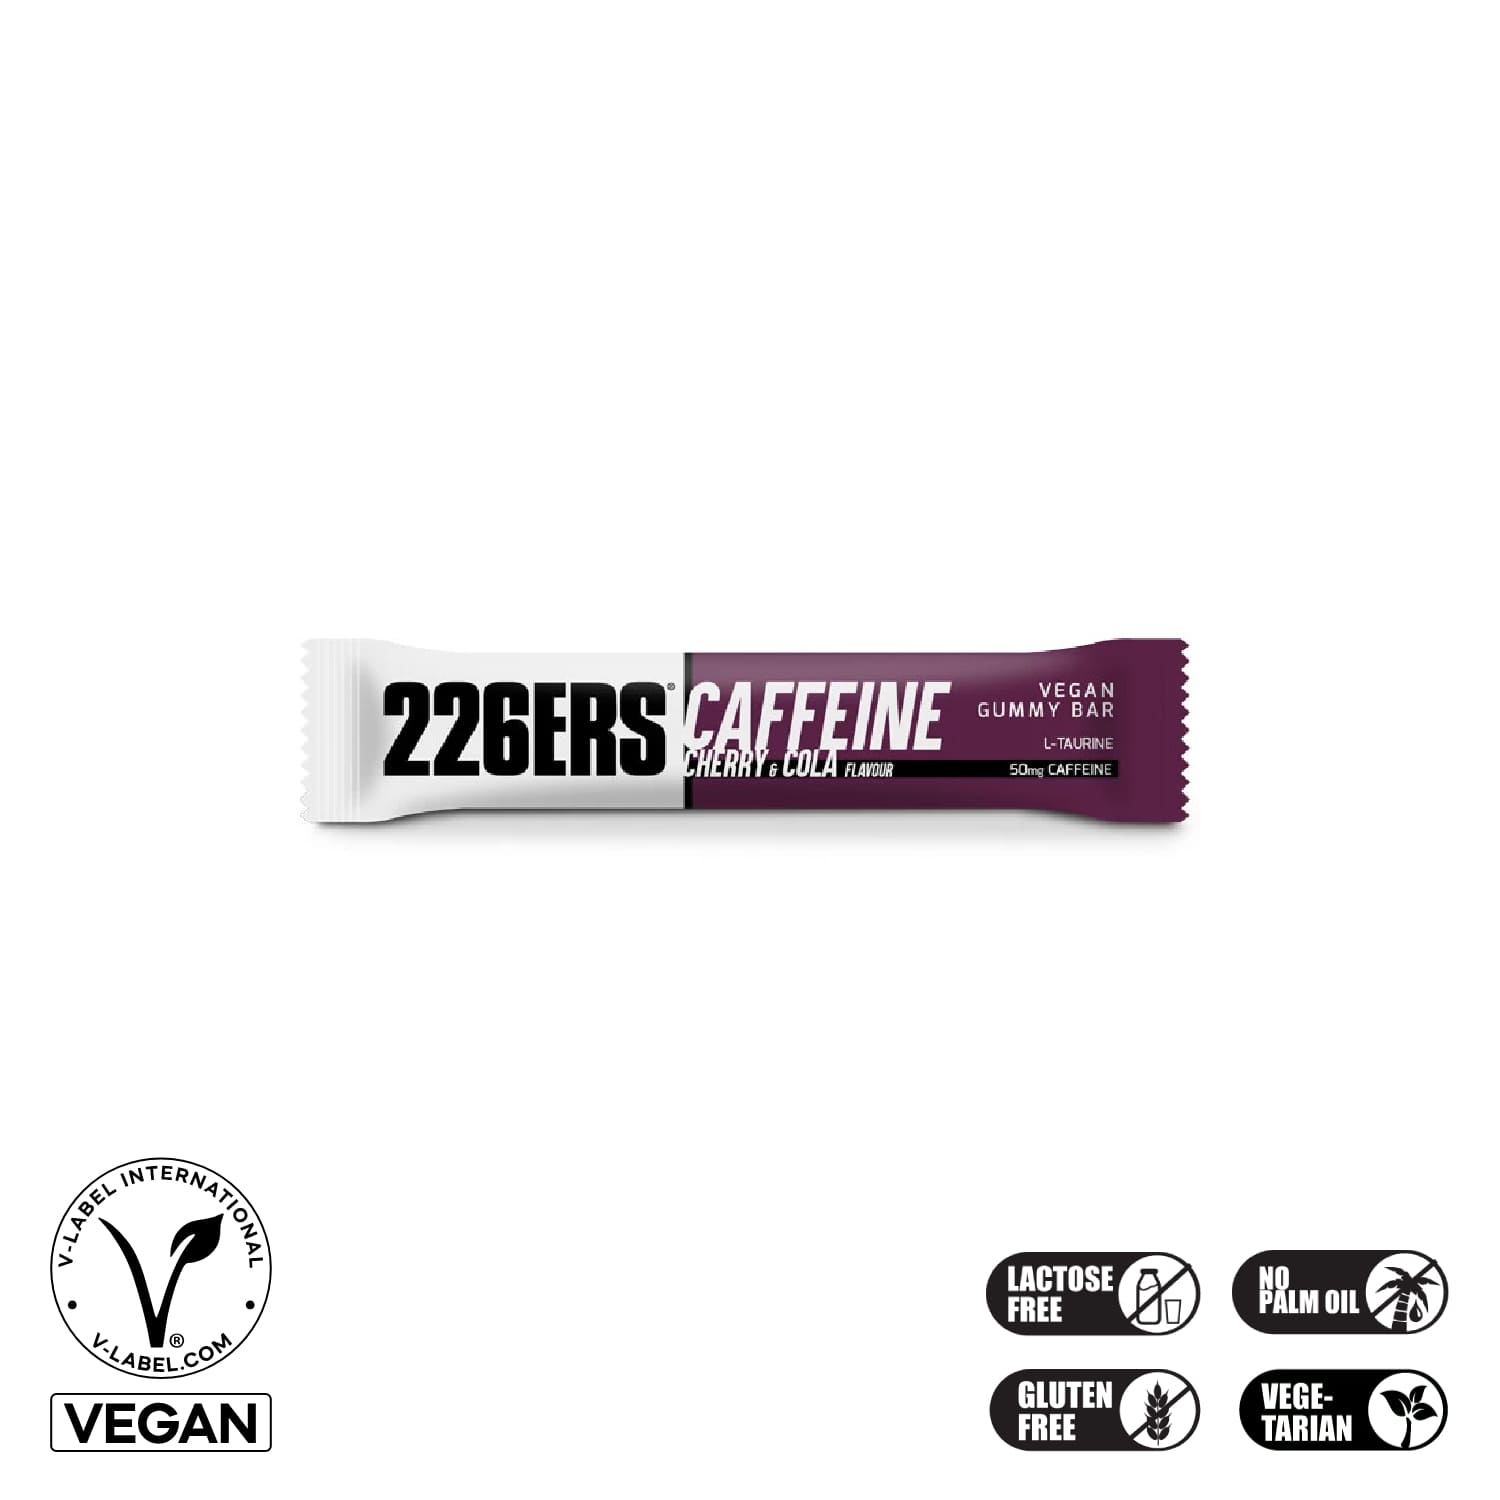 226ers_vegan gummy bar electrolytes_cherry cola